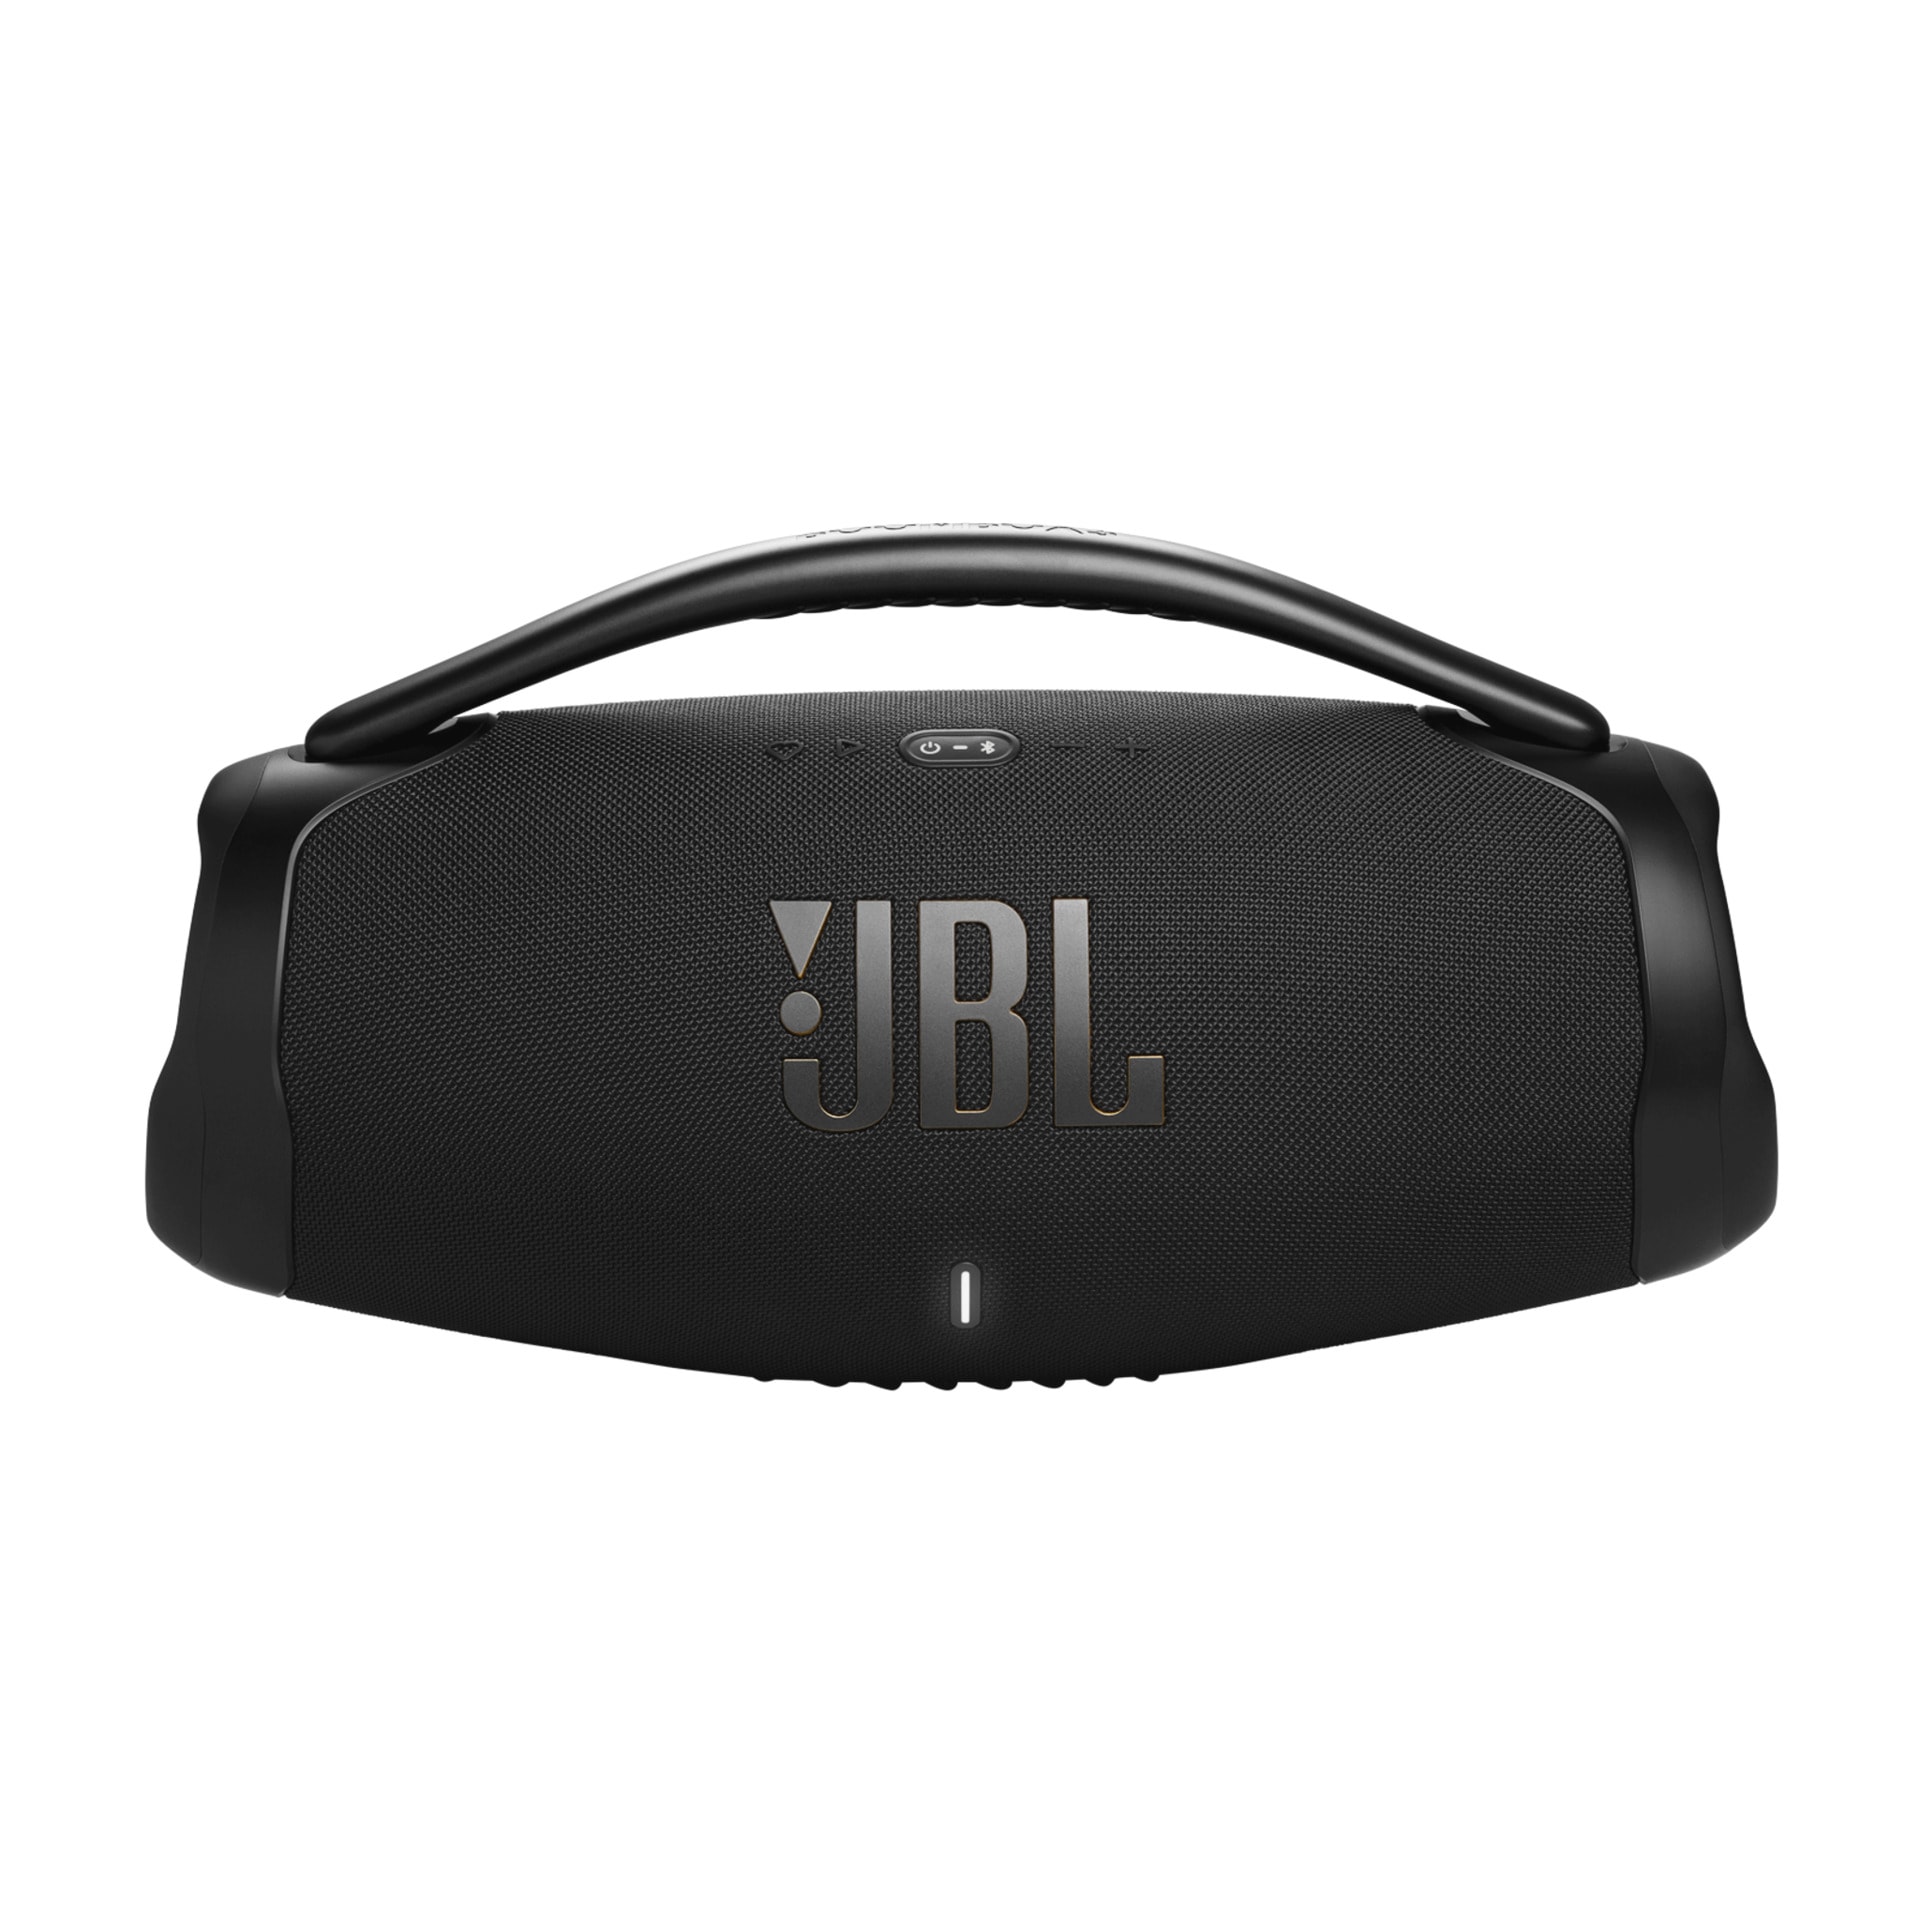 (1 »Boombox Party-Lautsprecher 3 Online Wi-Fi«, im OTTO St.) Shop JBL